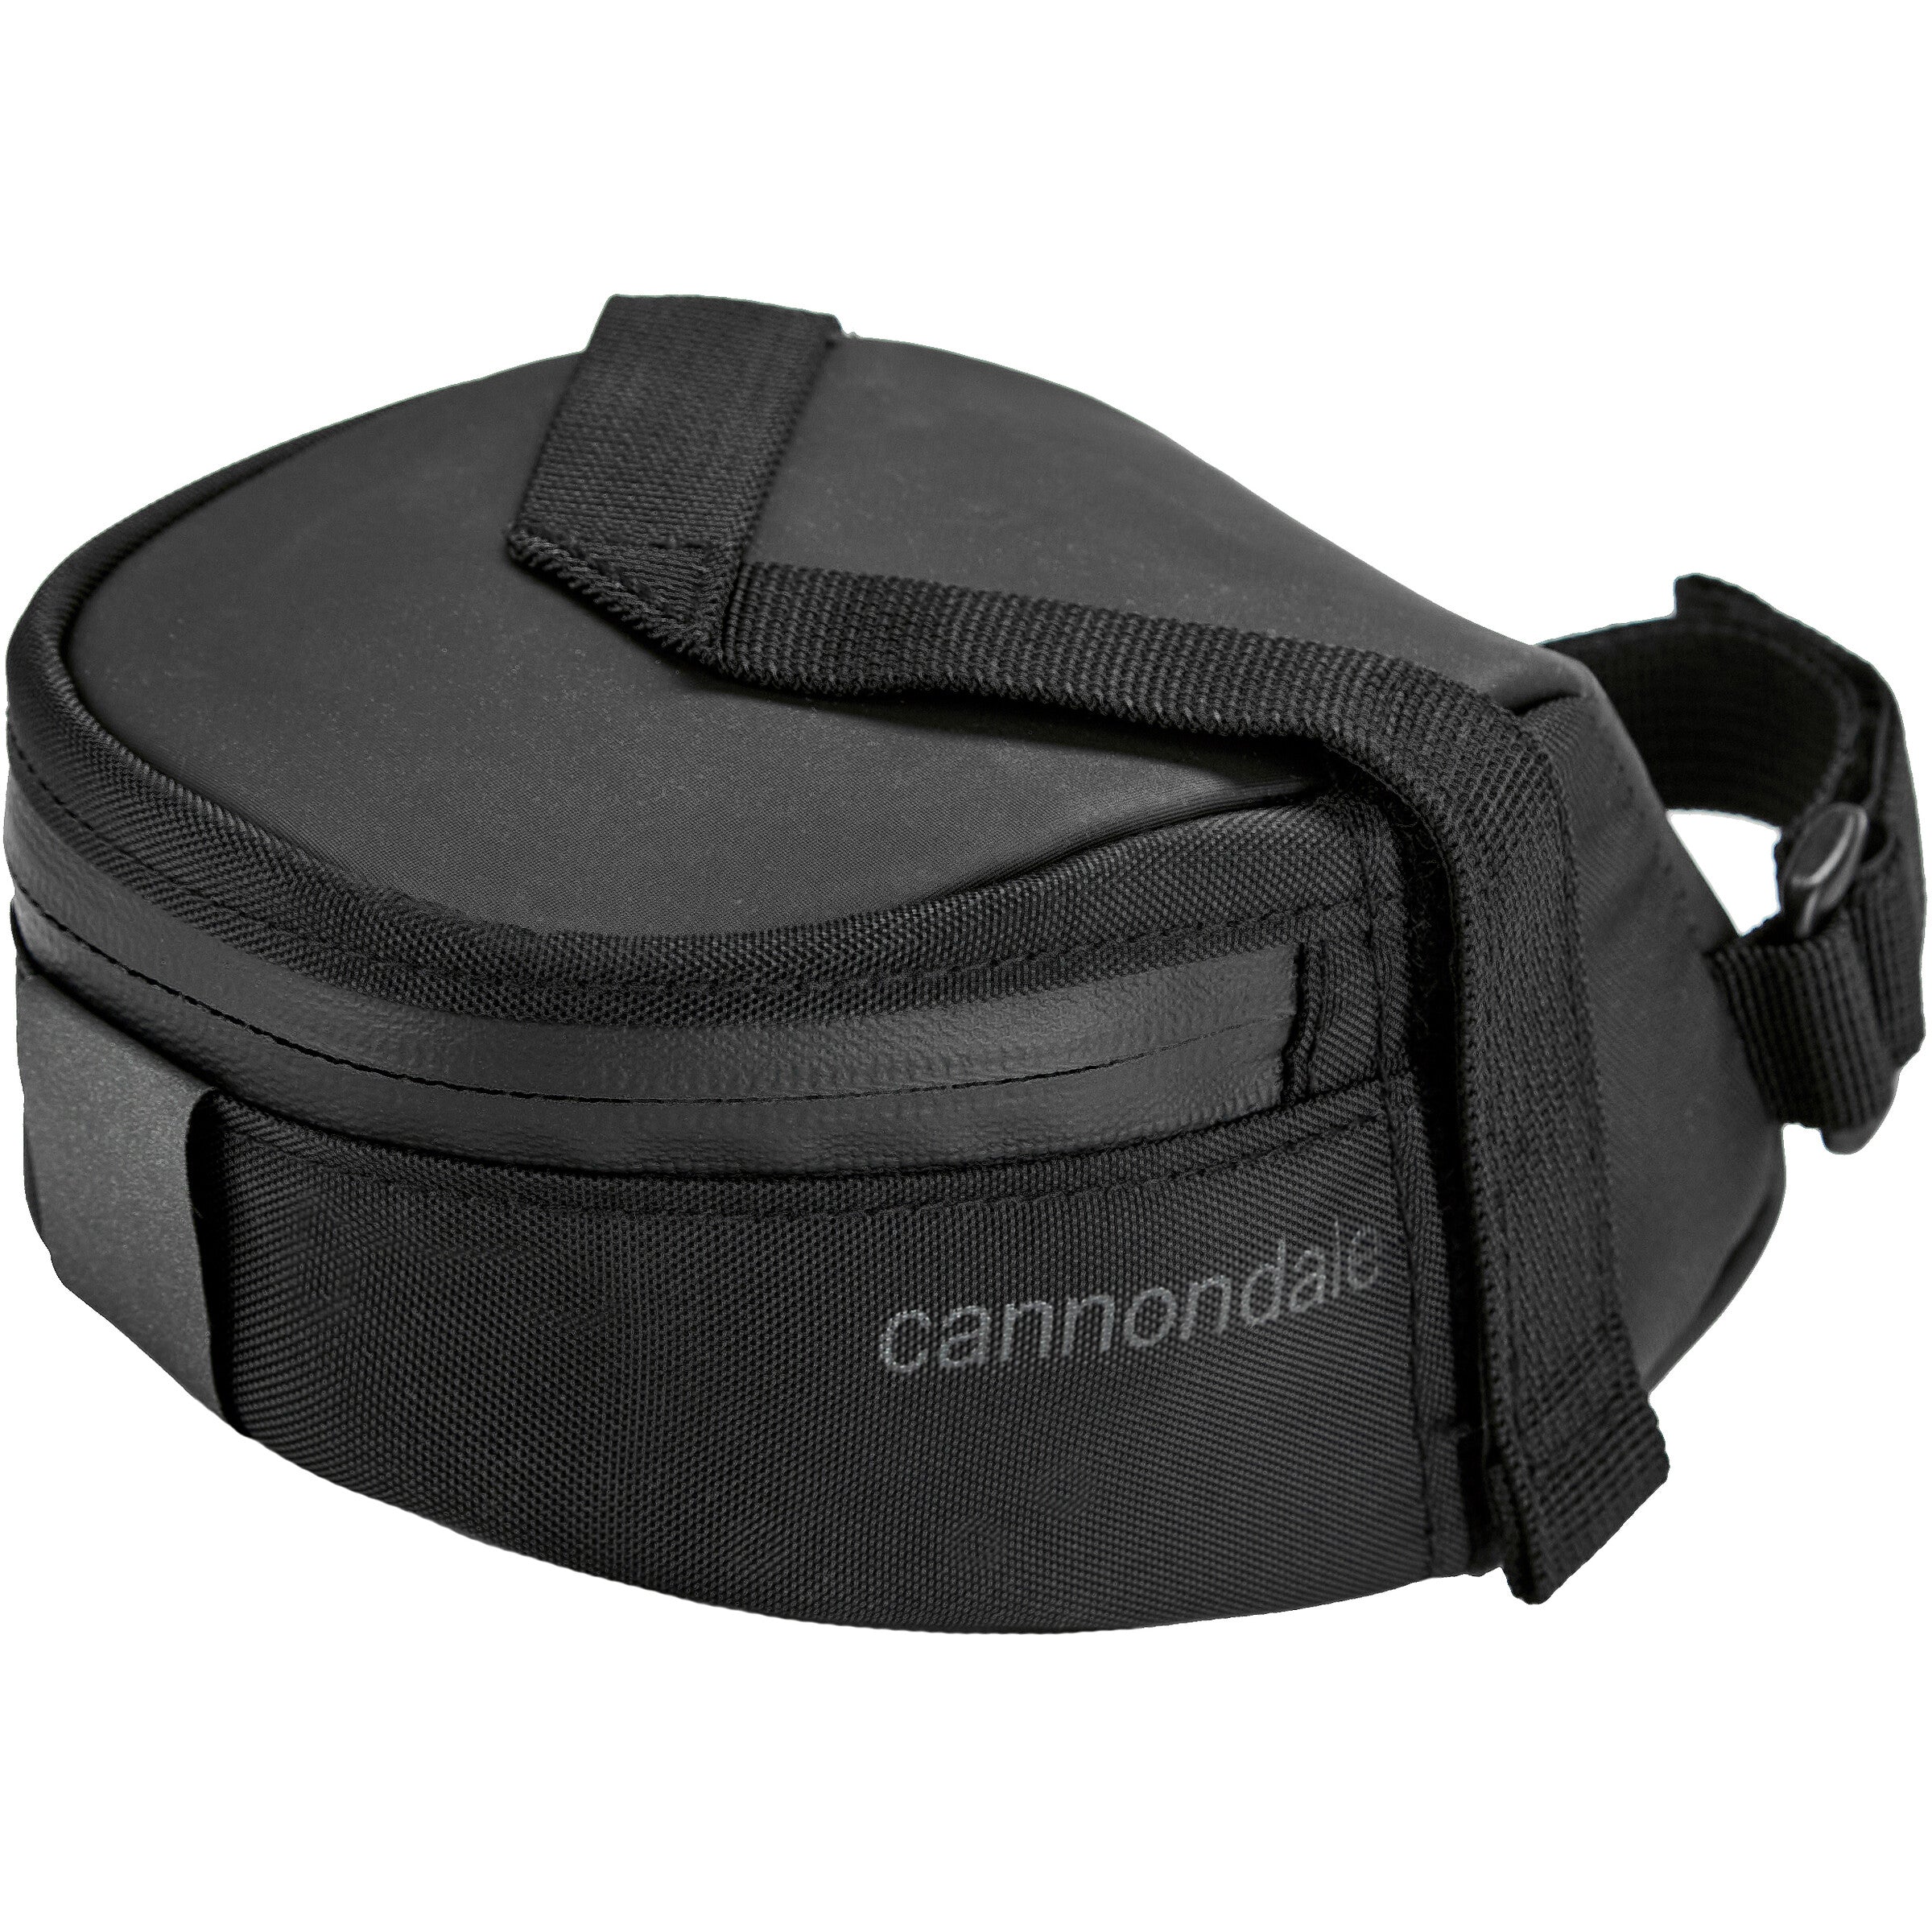 Cannondale Contain Stitched Velcro Satteltasche - Medium